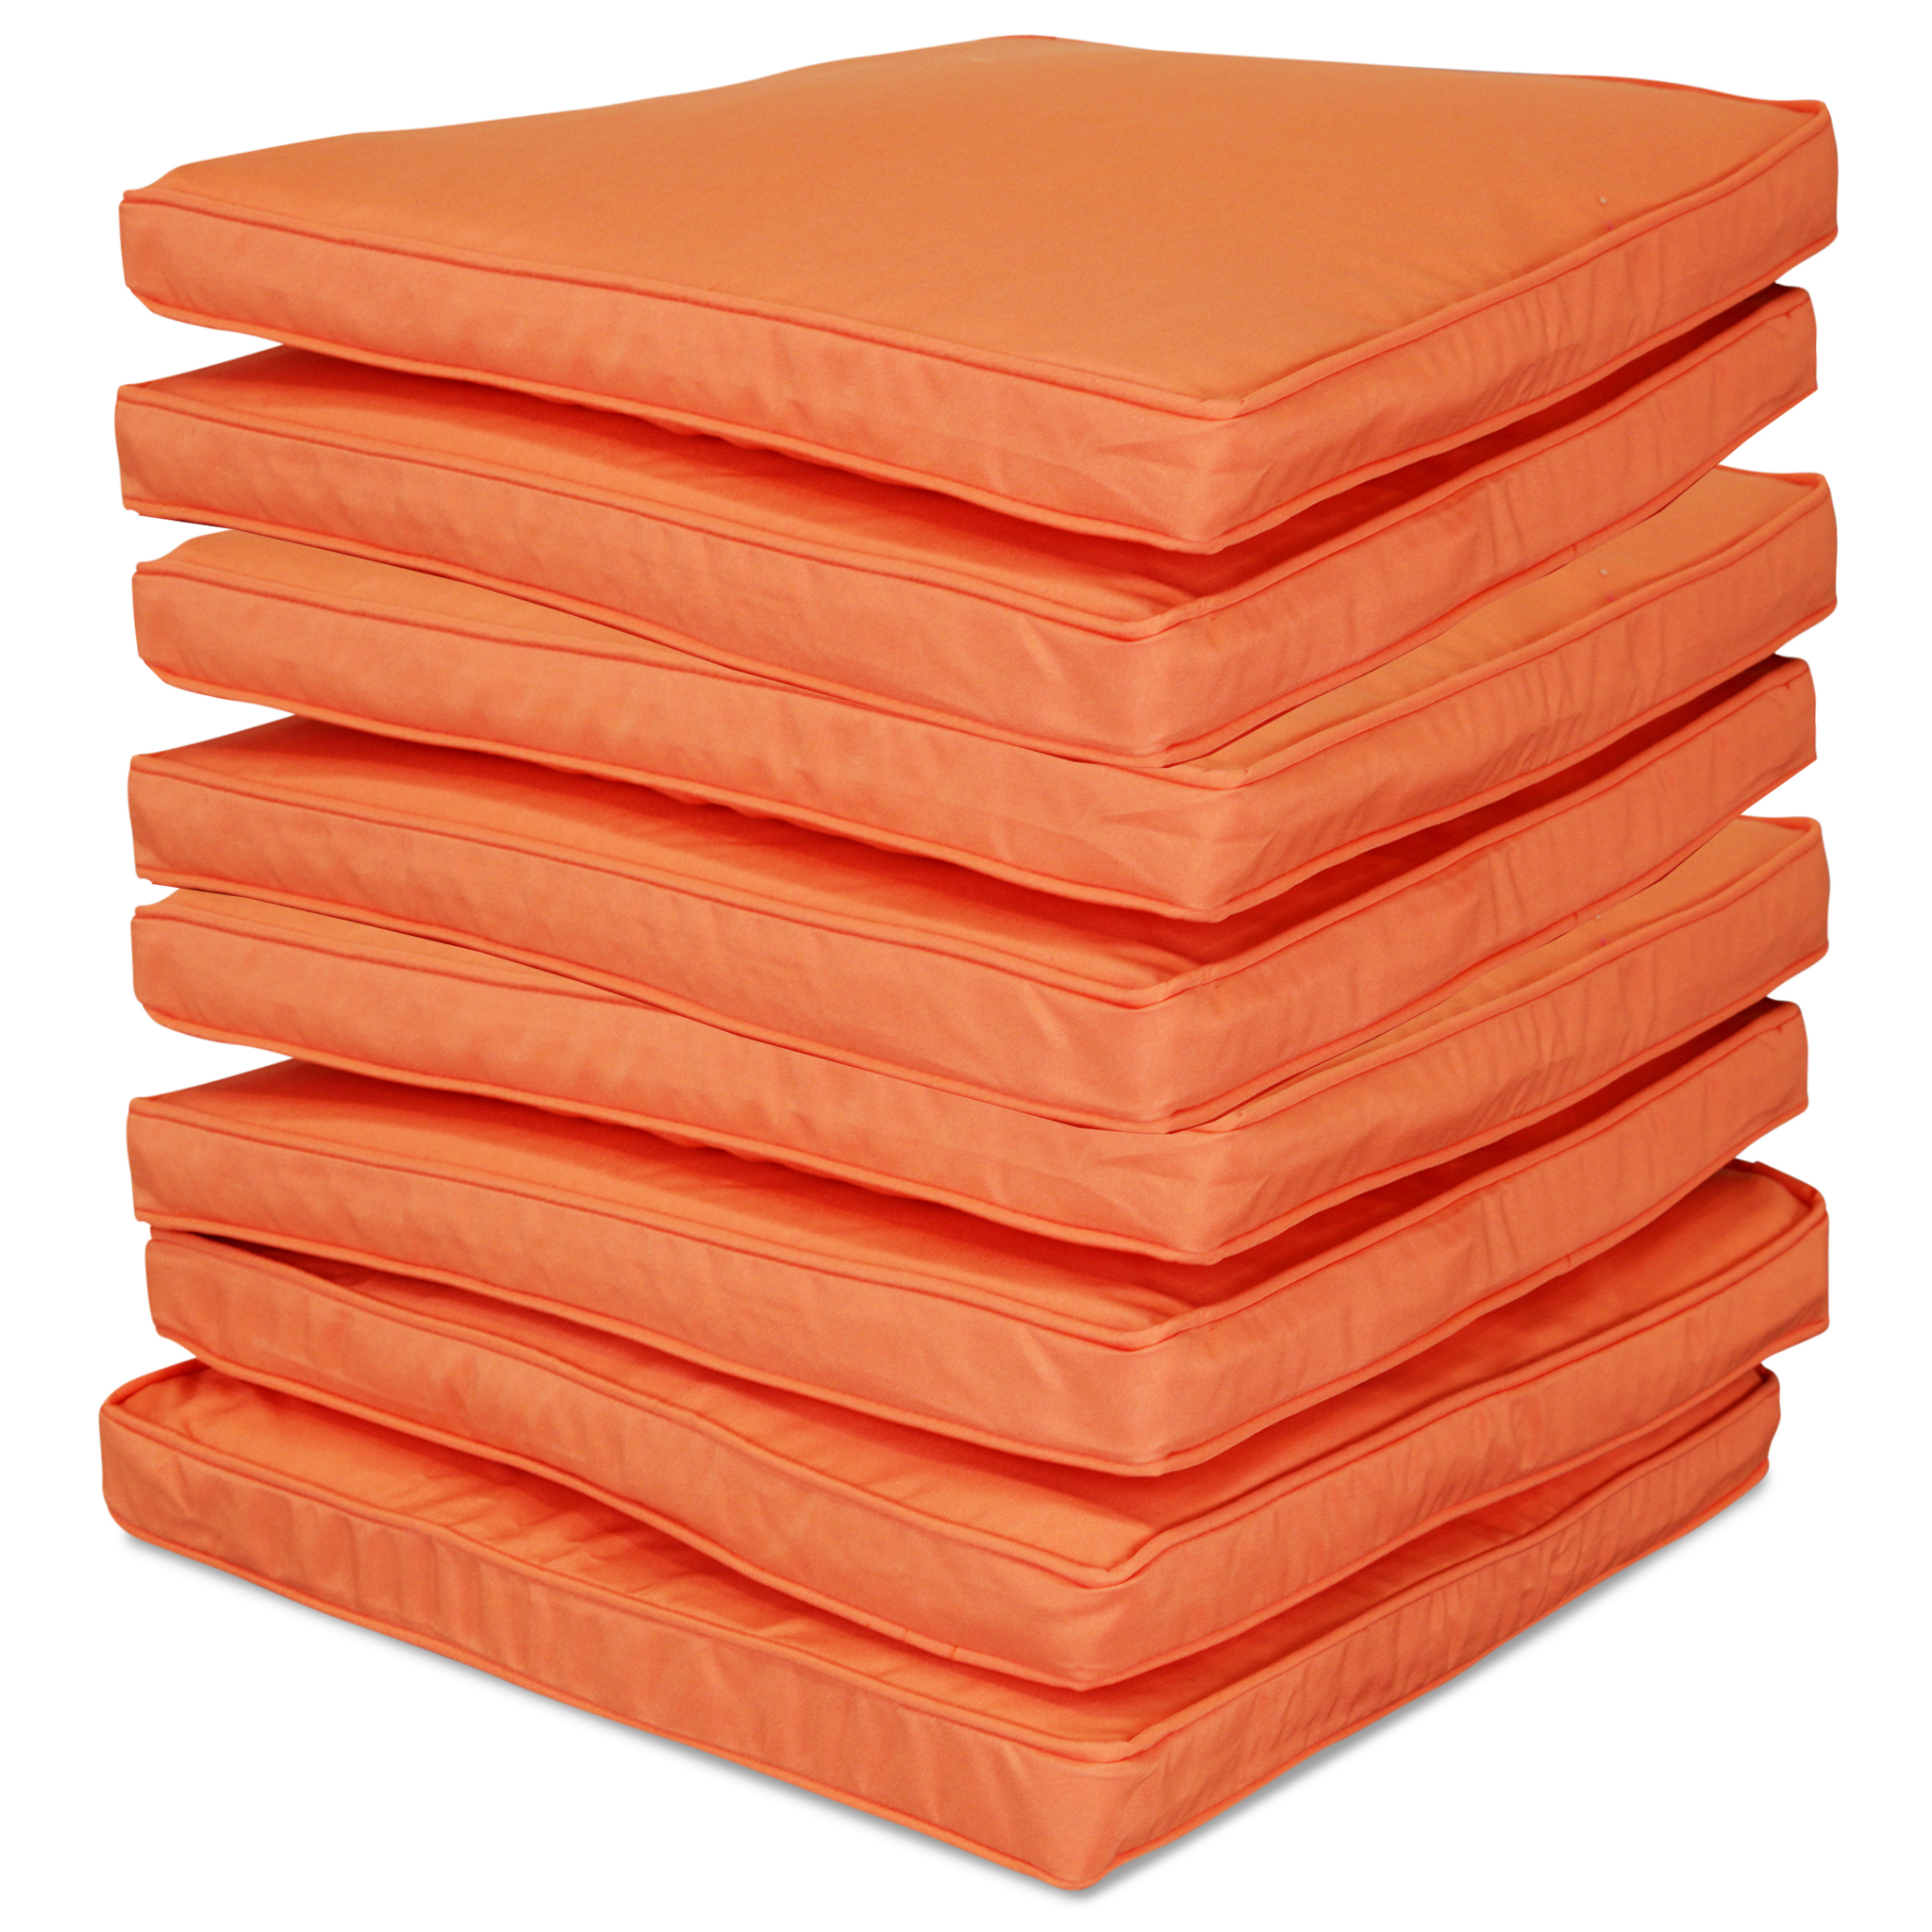 Dynklädsel till sittdynor, 8-pack - Orange